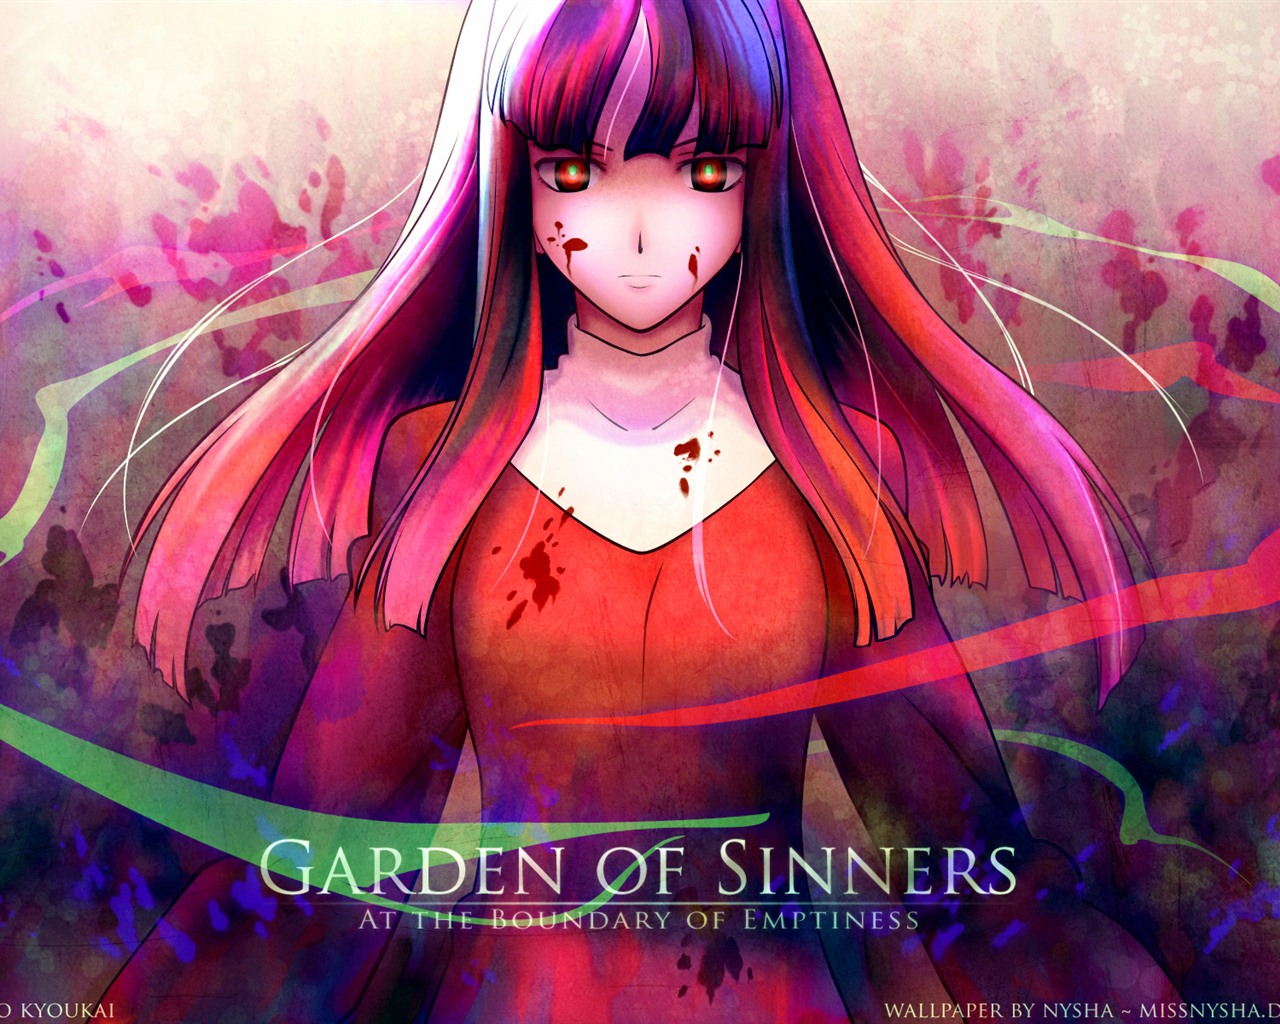 the Garden of sinners HD wallpapers #1 - 1280x1024